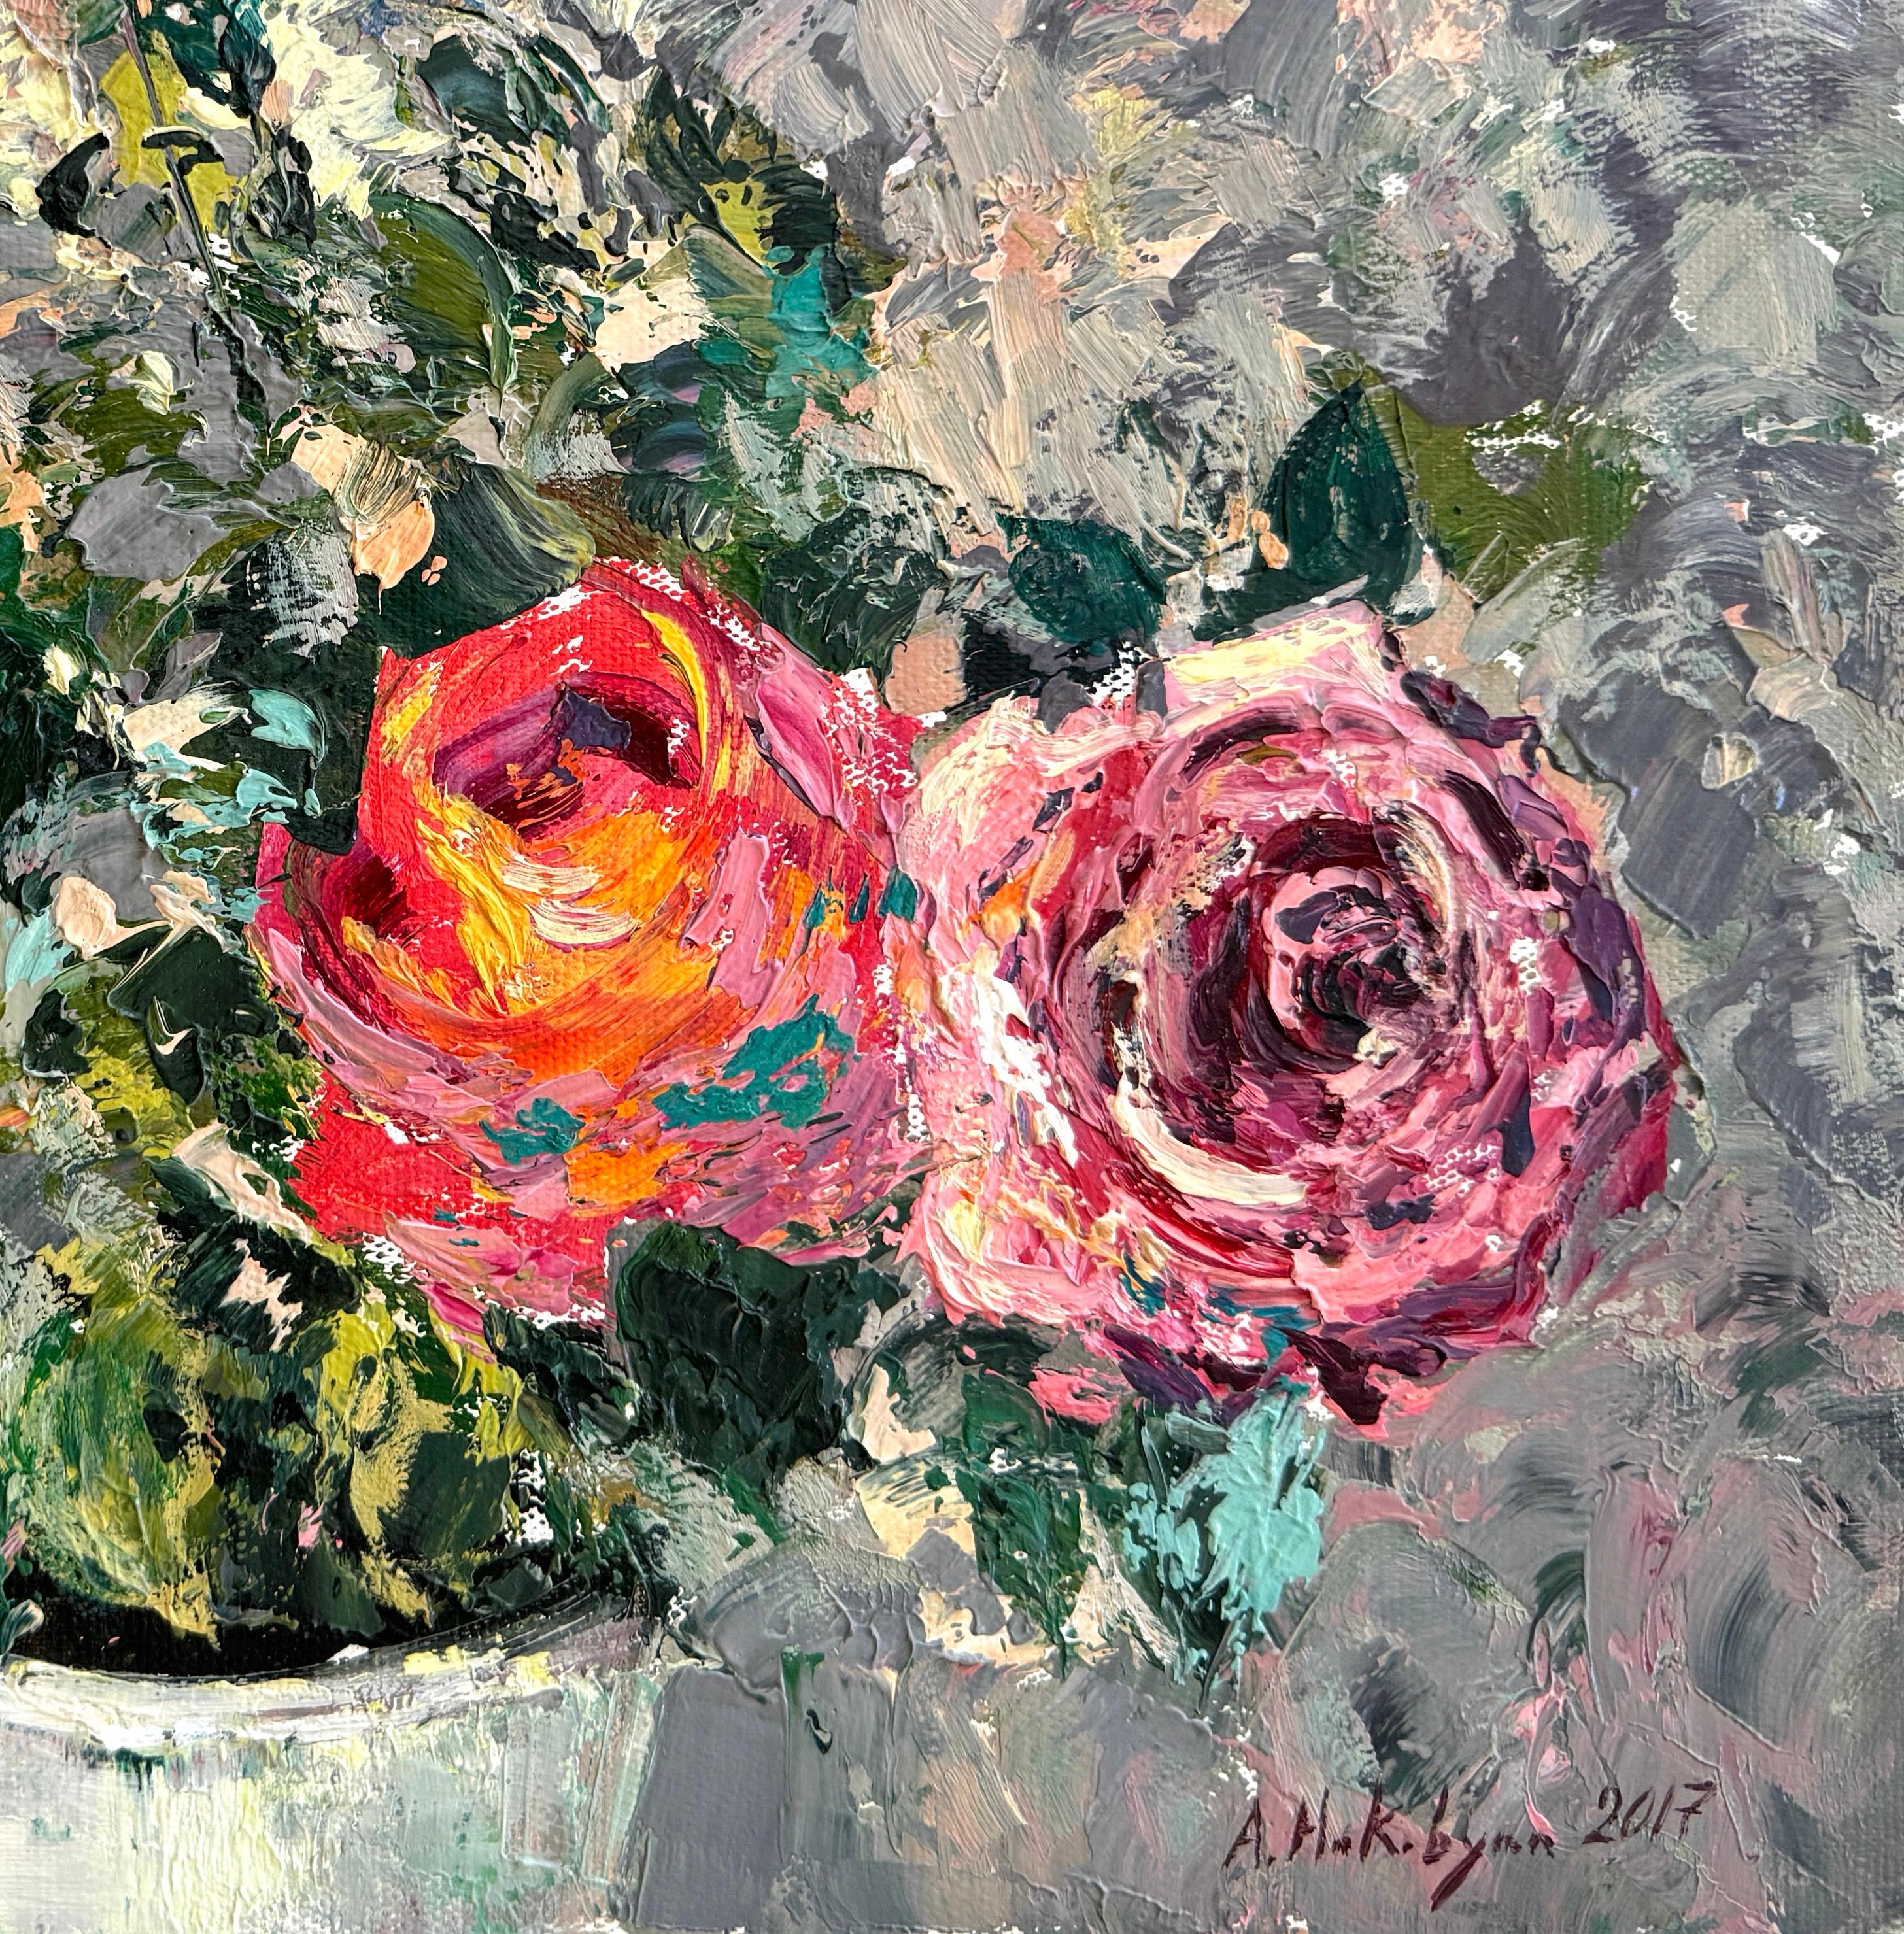 Artist: Ara H. Hakobyan
Work: Original Oil Painting, Handmade Artwork, One of a Kind
Medium: Oil on Canvas
Year: 2017
Style: Impressionism
Title: Roses
Size: 12